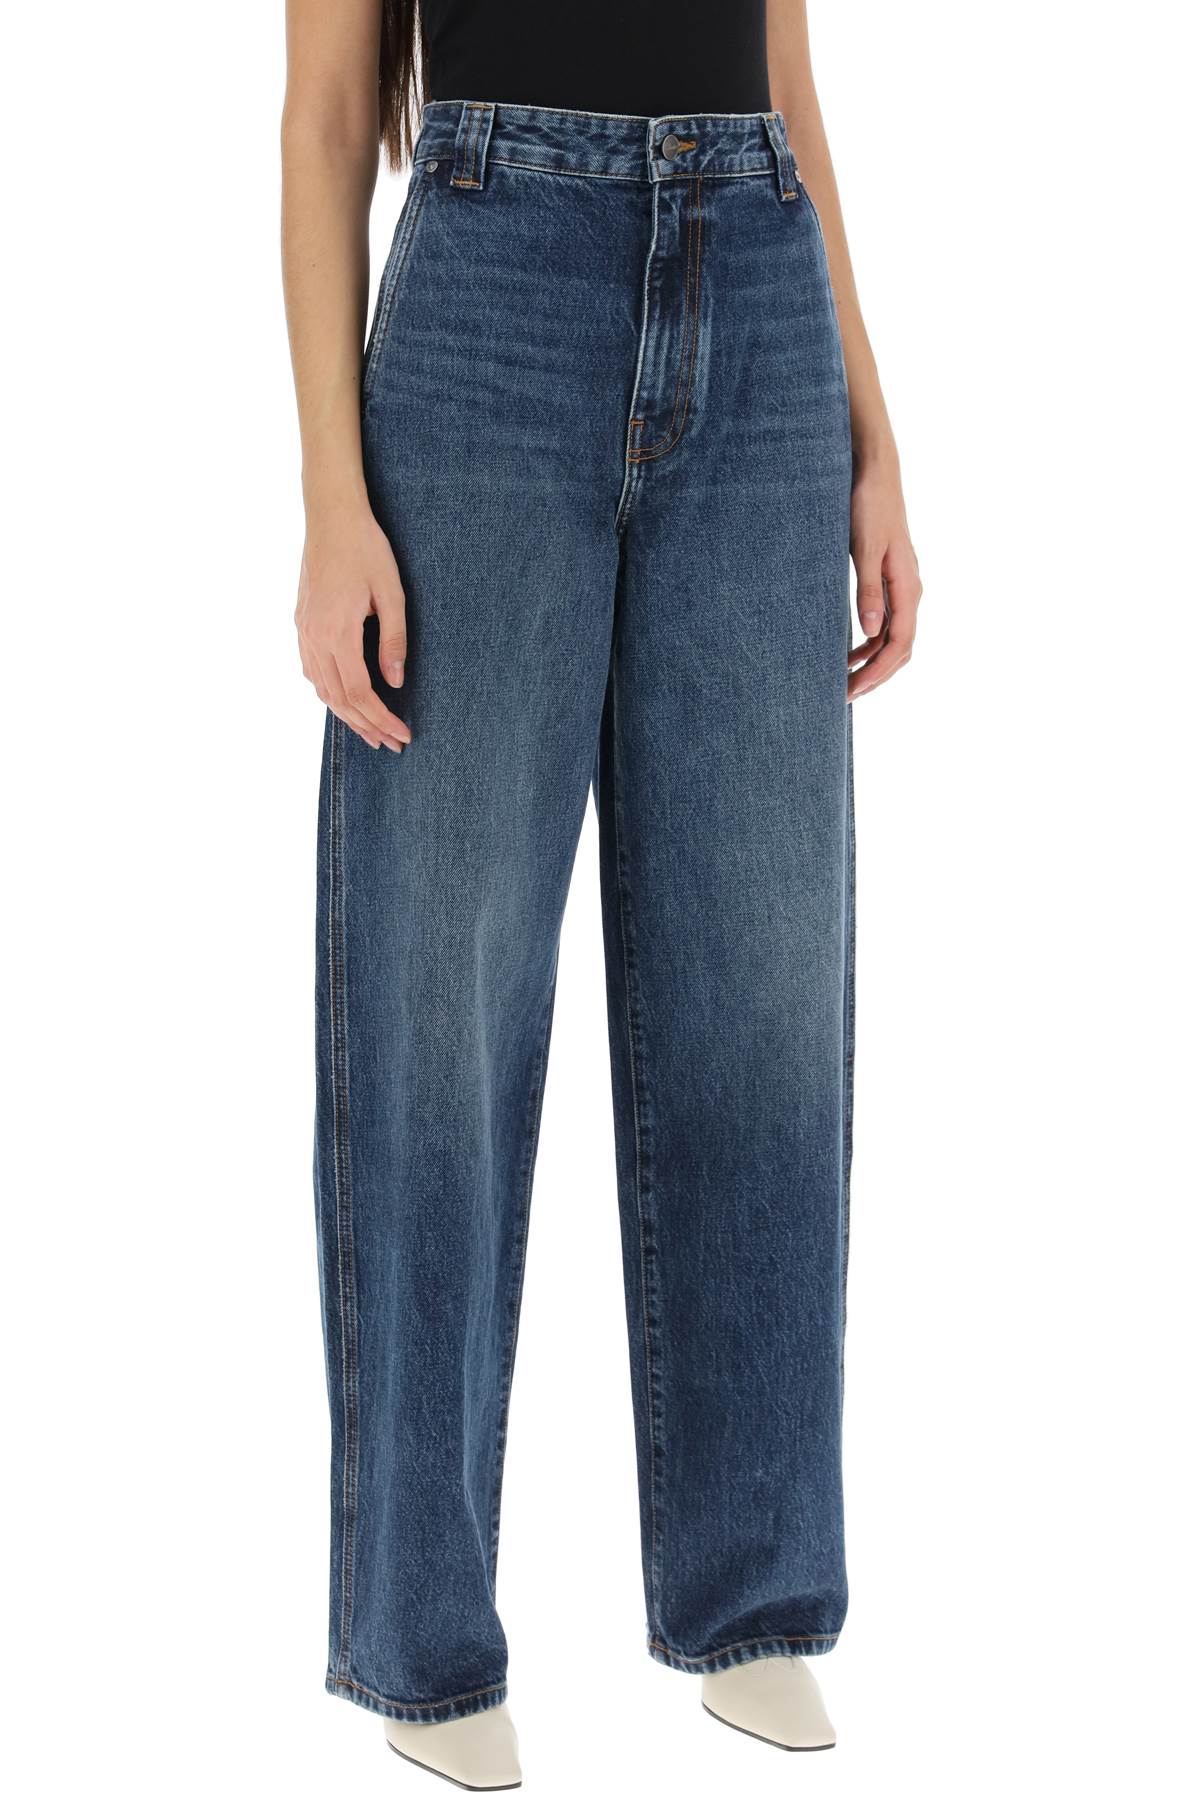 Khaite bacall wide leg jeans-1